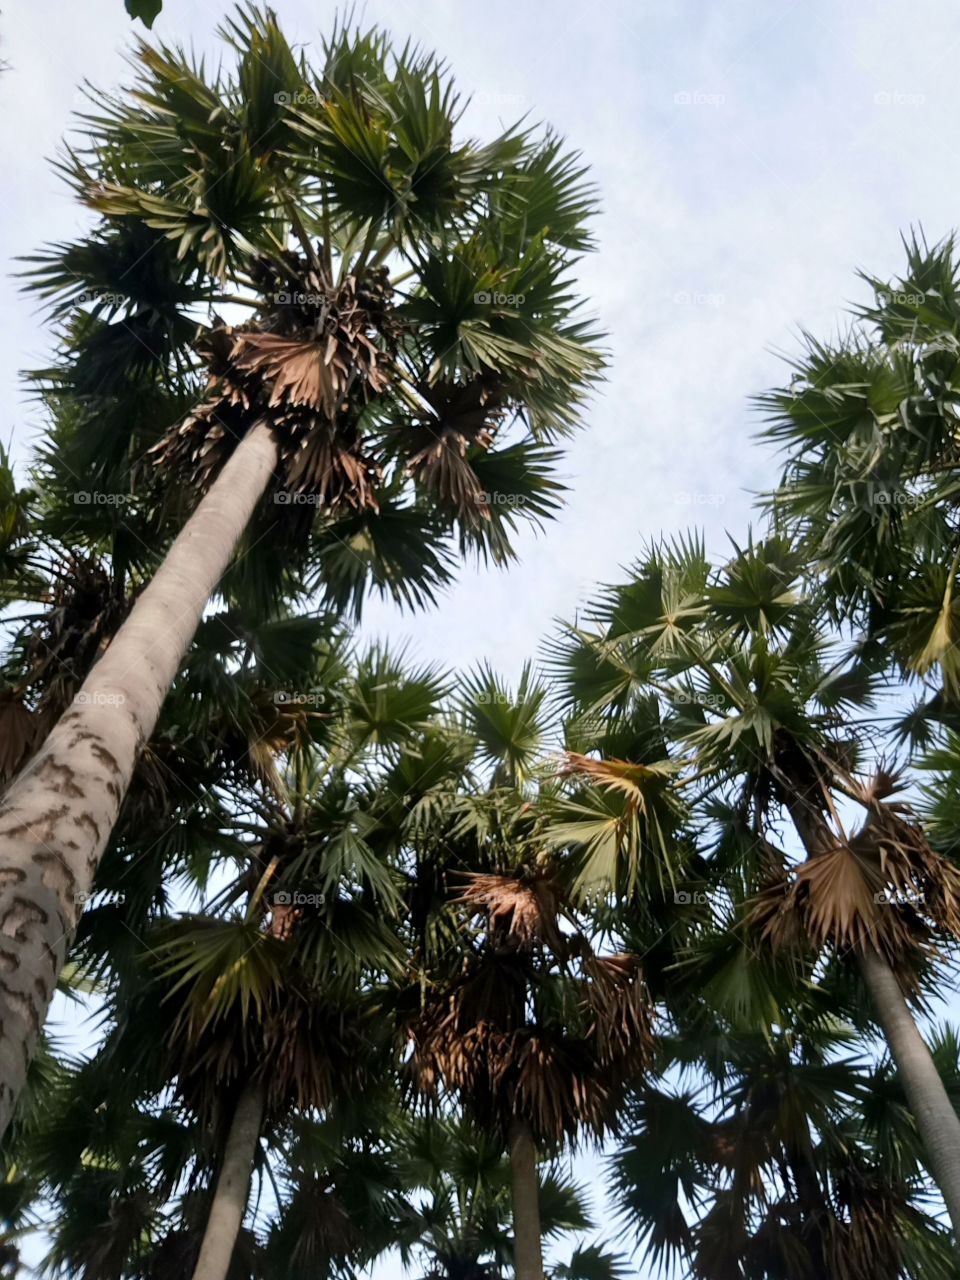 palm
tree
landscape
tall
nature